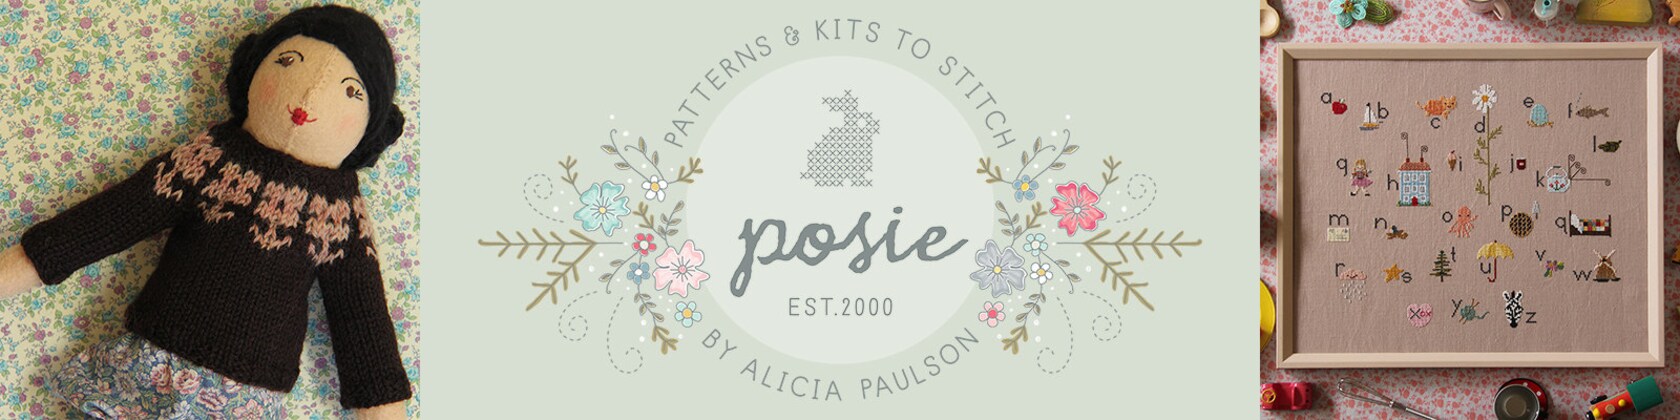 Crystal Star 1 Mini Cross Stitch Kit  Posie: Patterns and Kits to Stitch  by Alicia Paulson